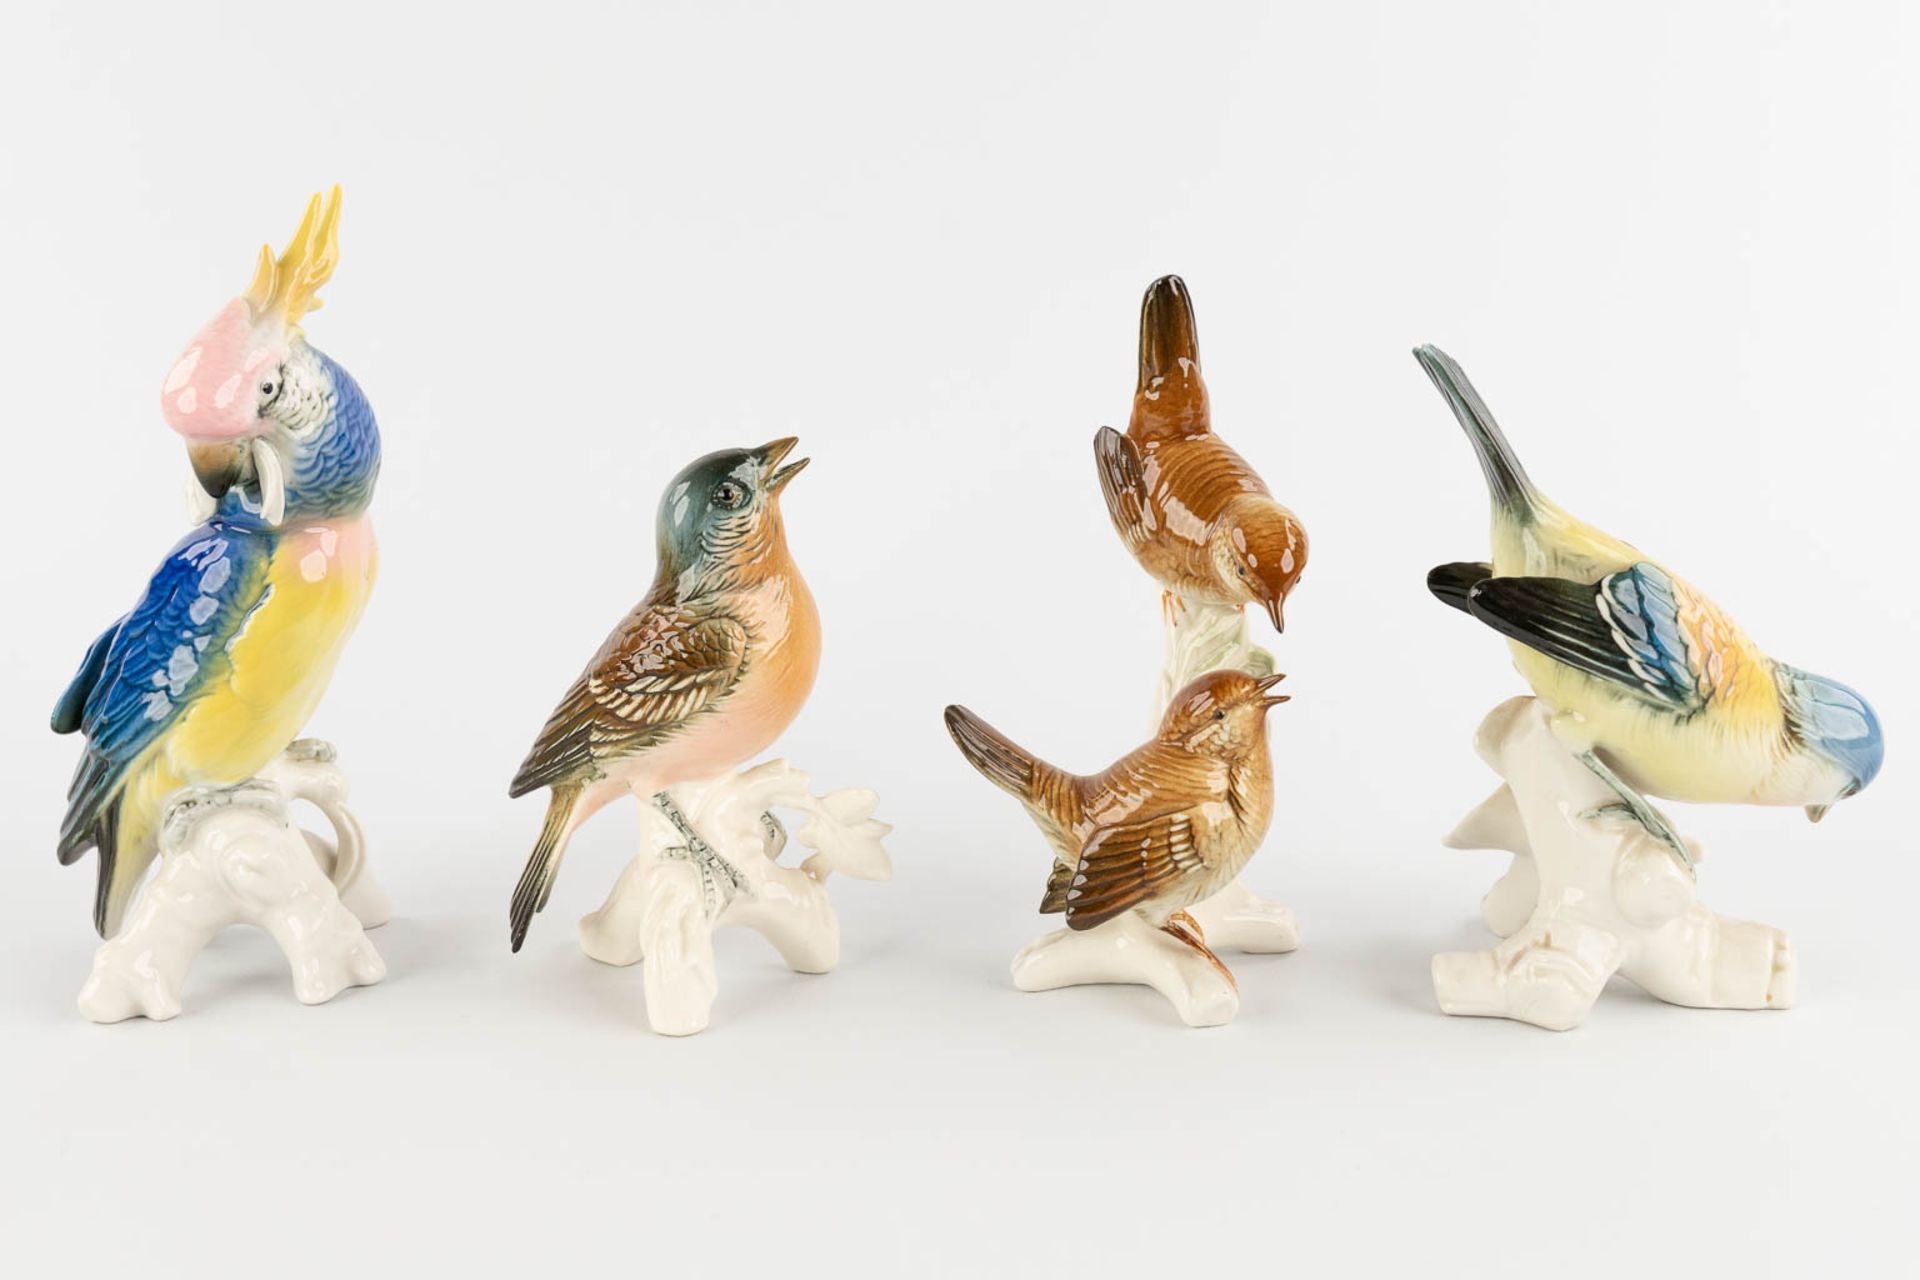 Karl ENS Porzellan, 8 birds, polychrome porcelain. 20th C. (H:19 cm) - Image 3 of 15